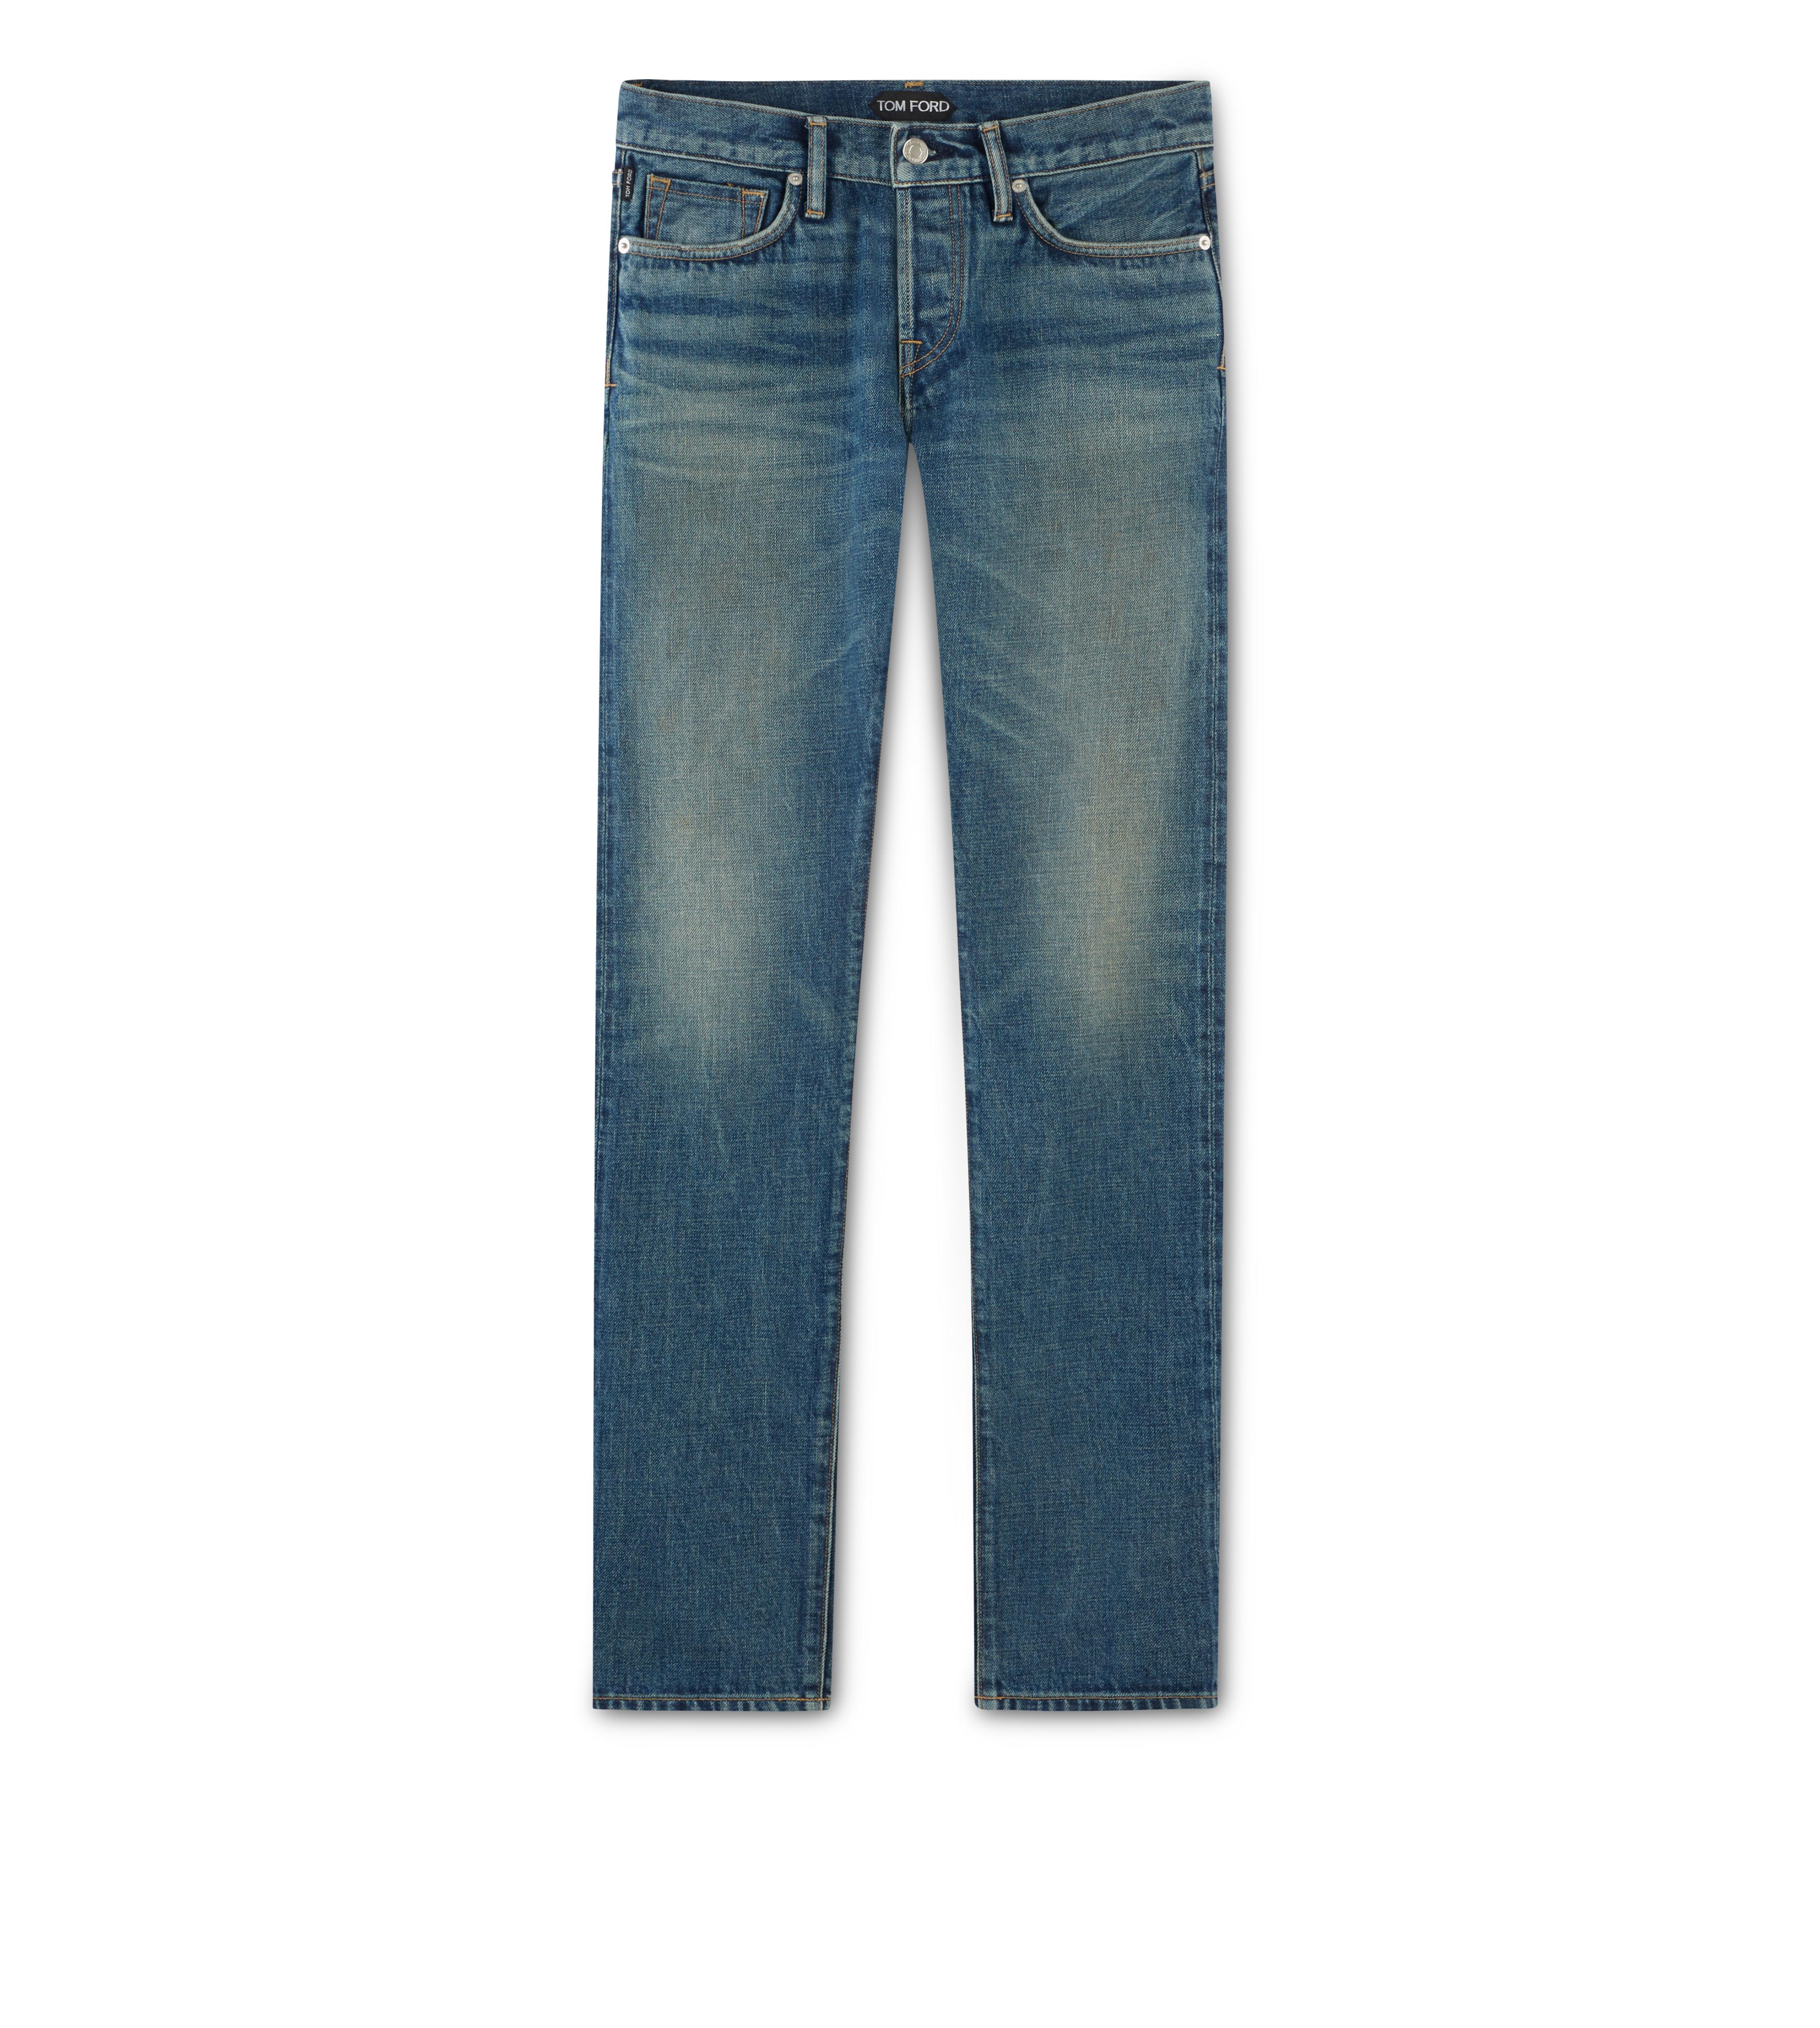 Jeans - TOM FORD | Men's Jeans | TomFord.co.uk